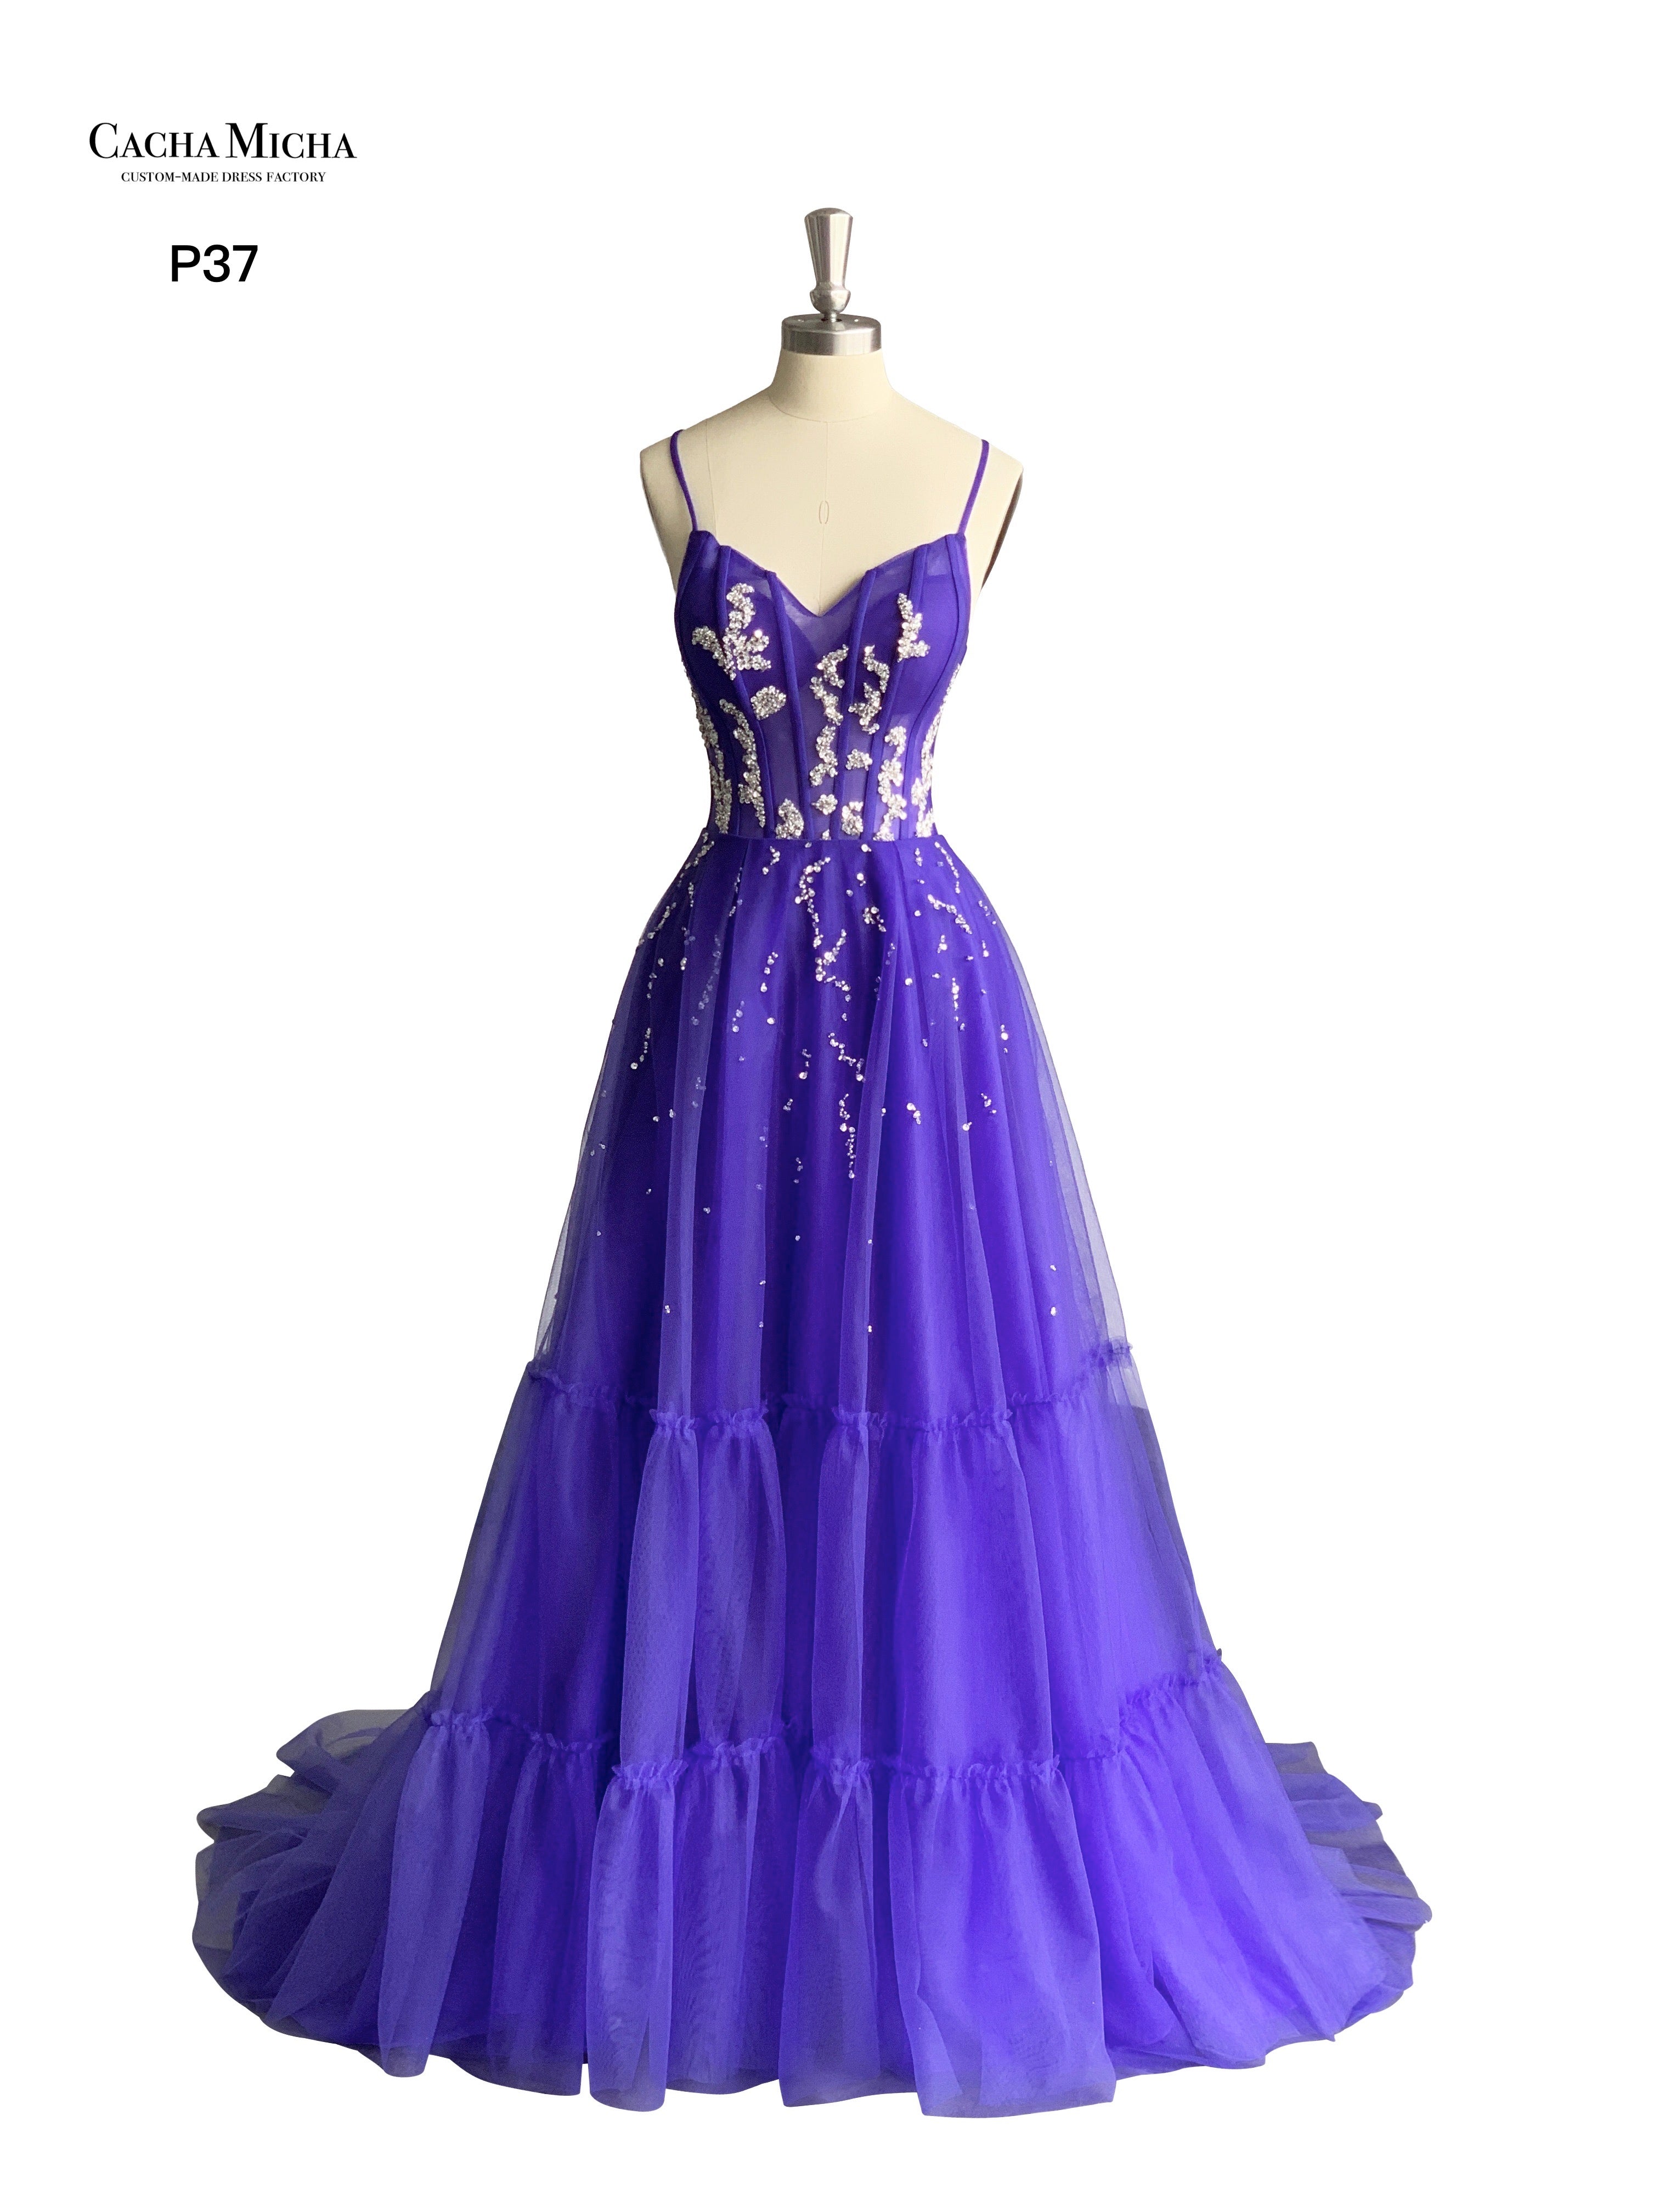 Beautiful Hand Beaded Purple Prom Dress P37